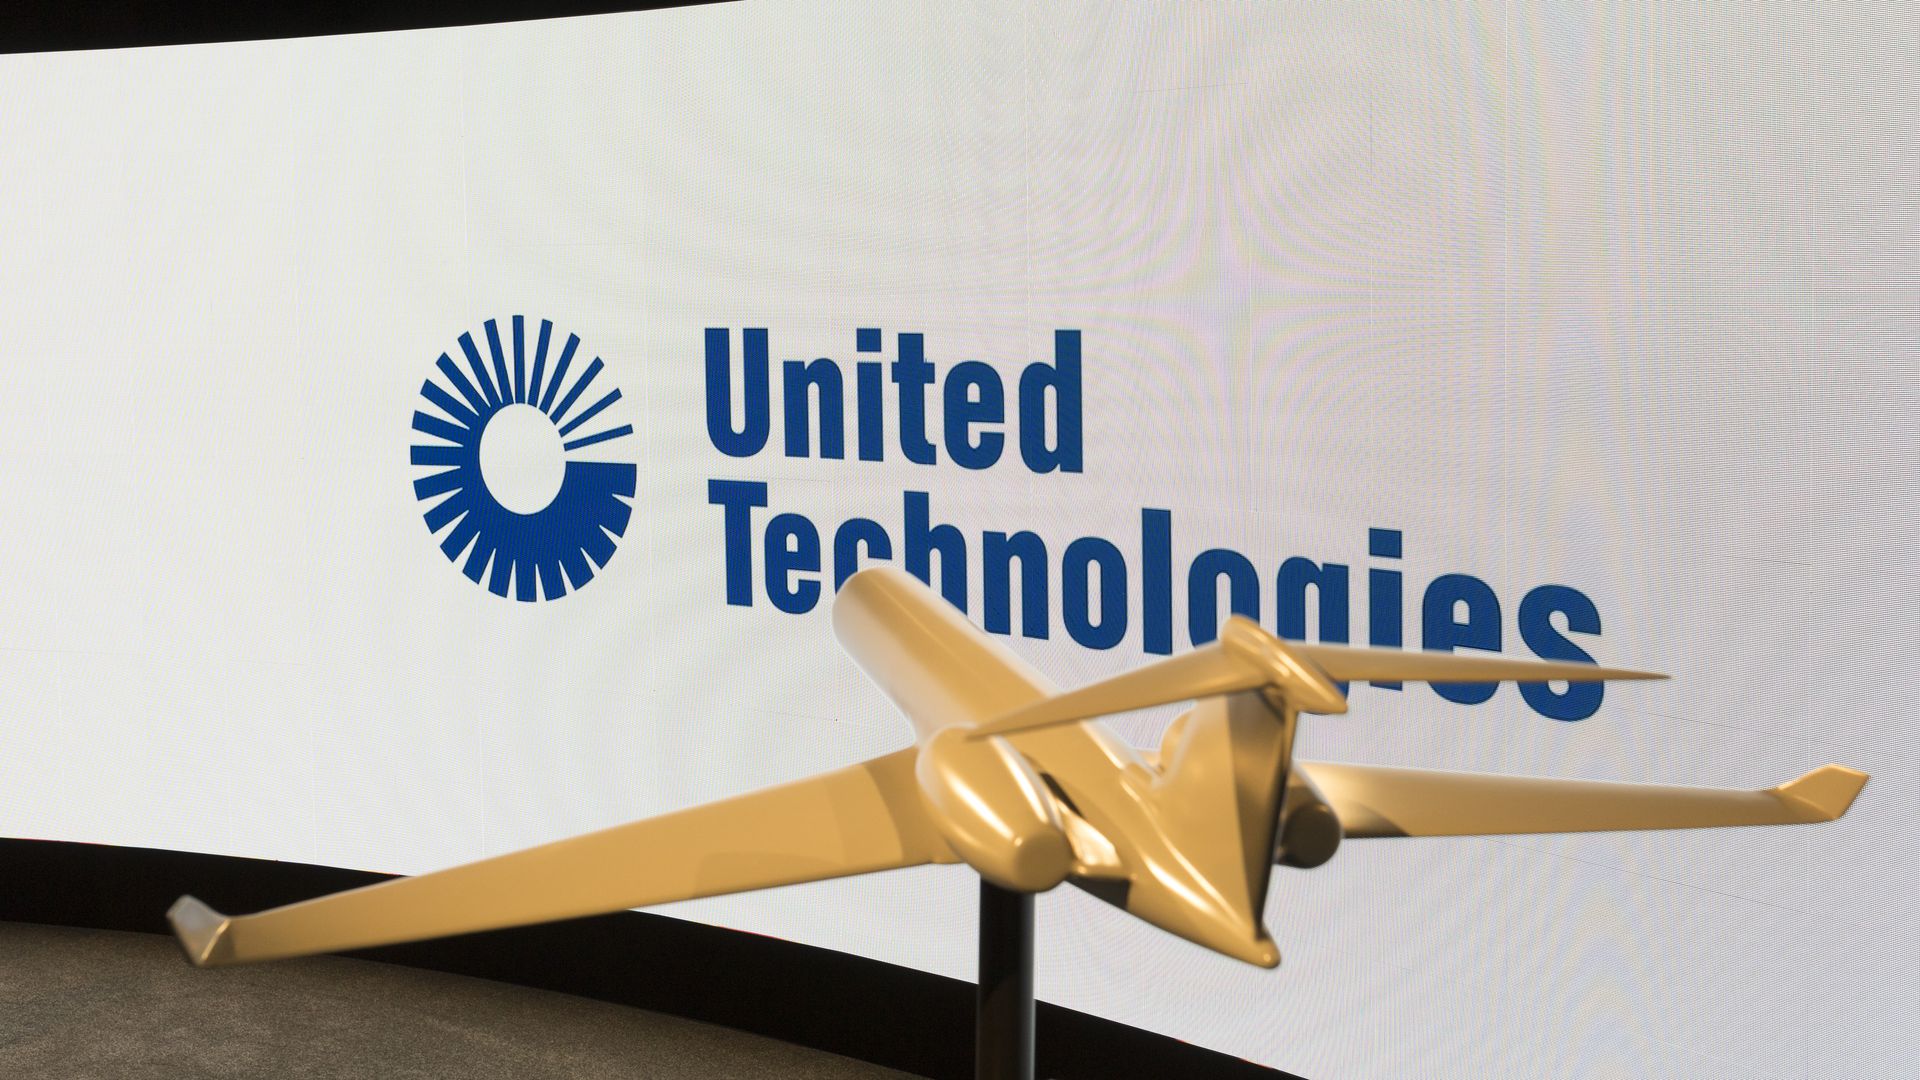 United Technologies presentation at the Farnborough Airshow